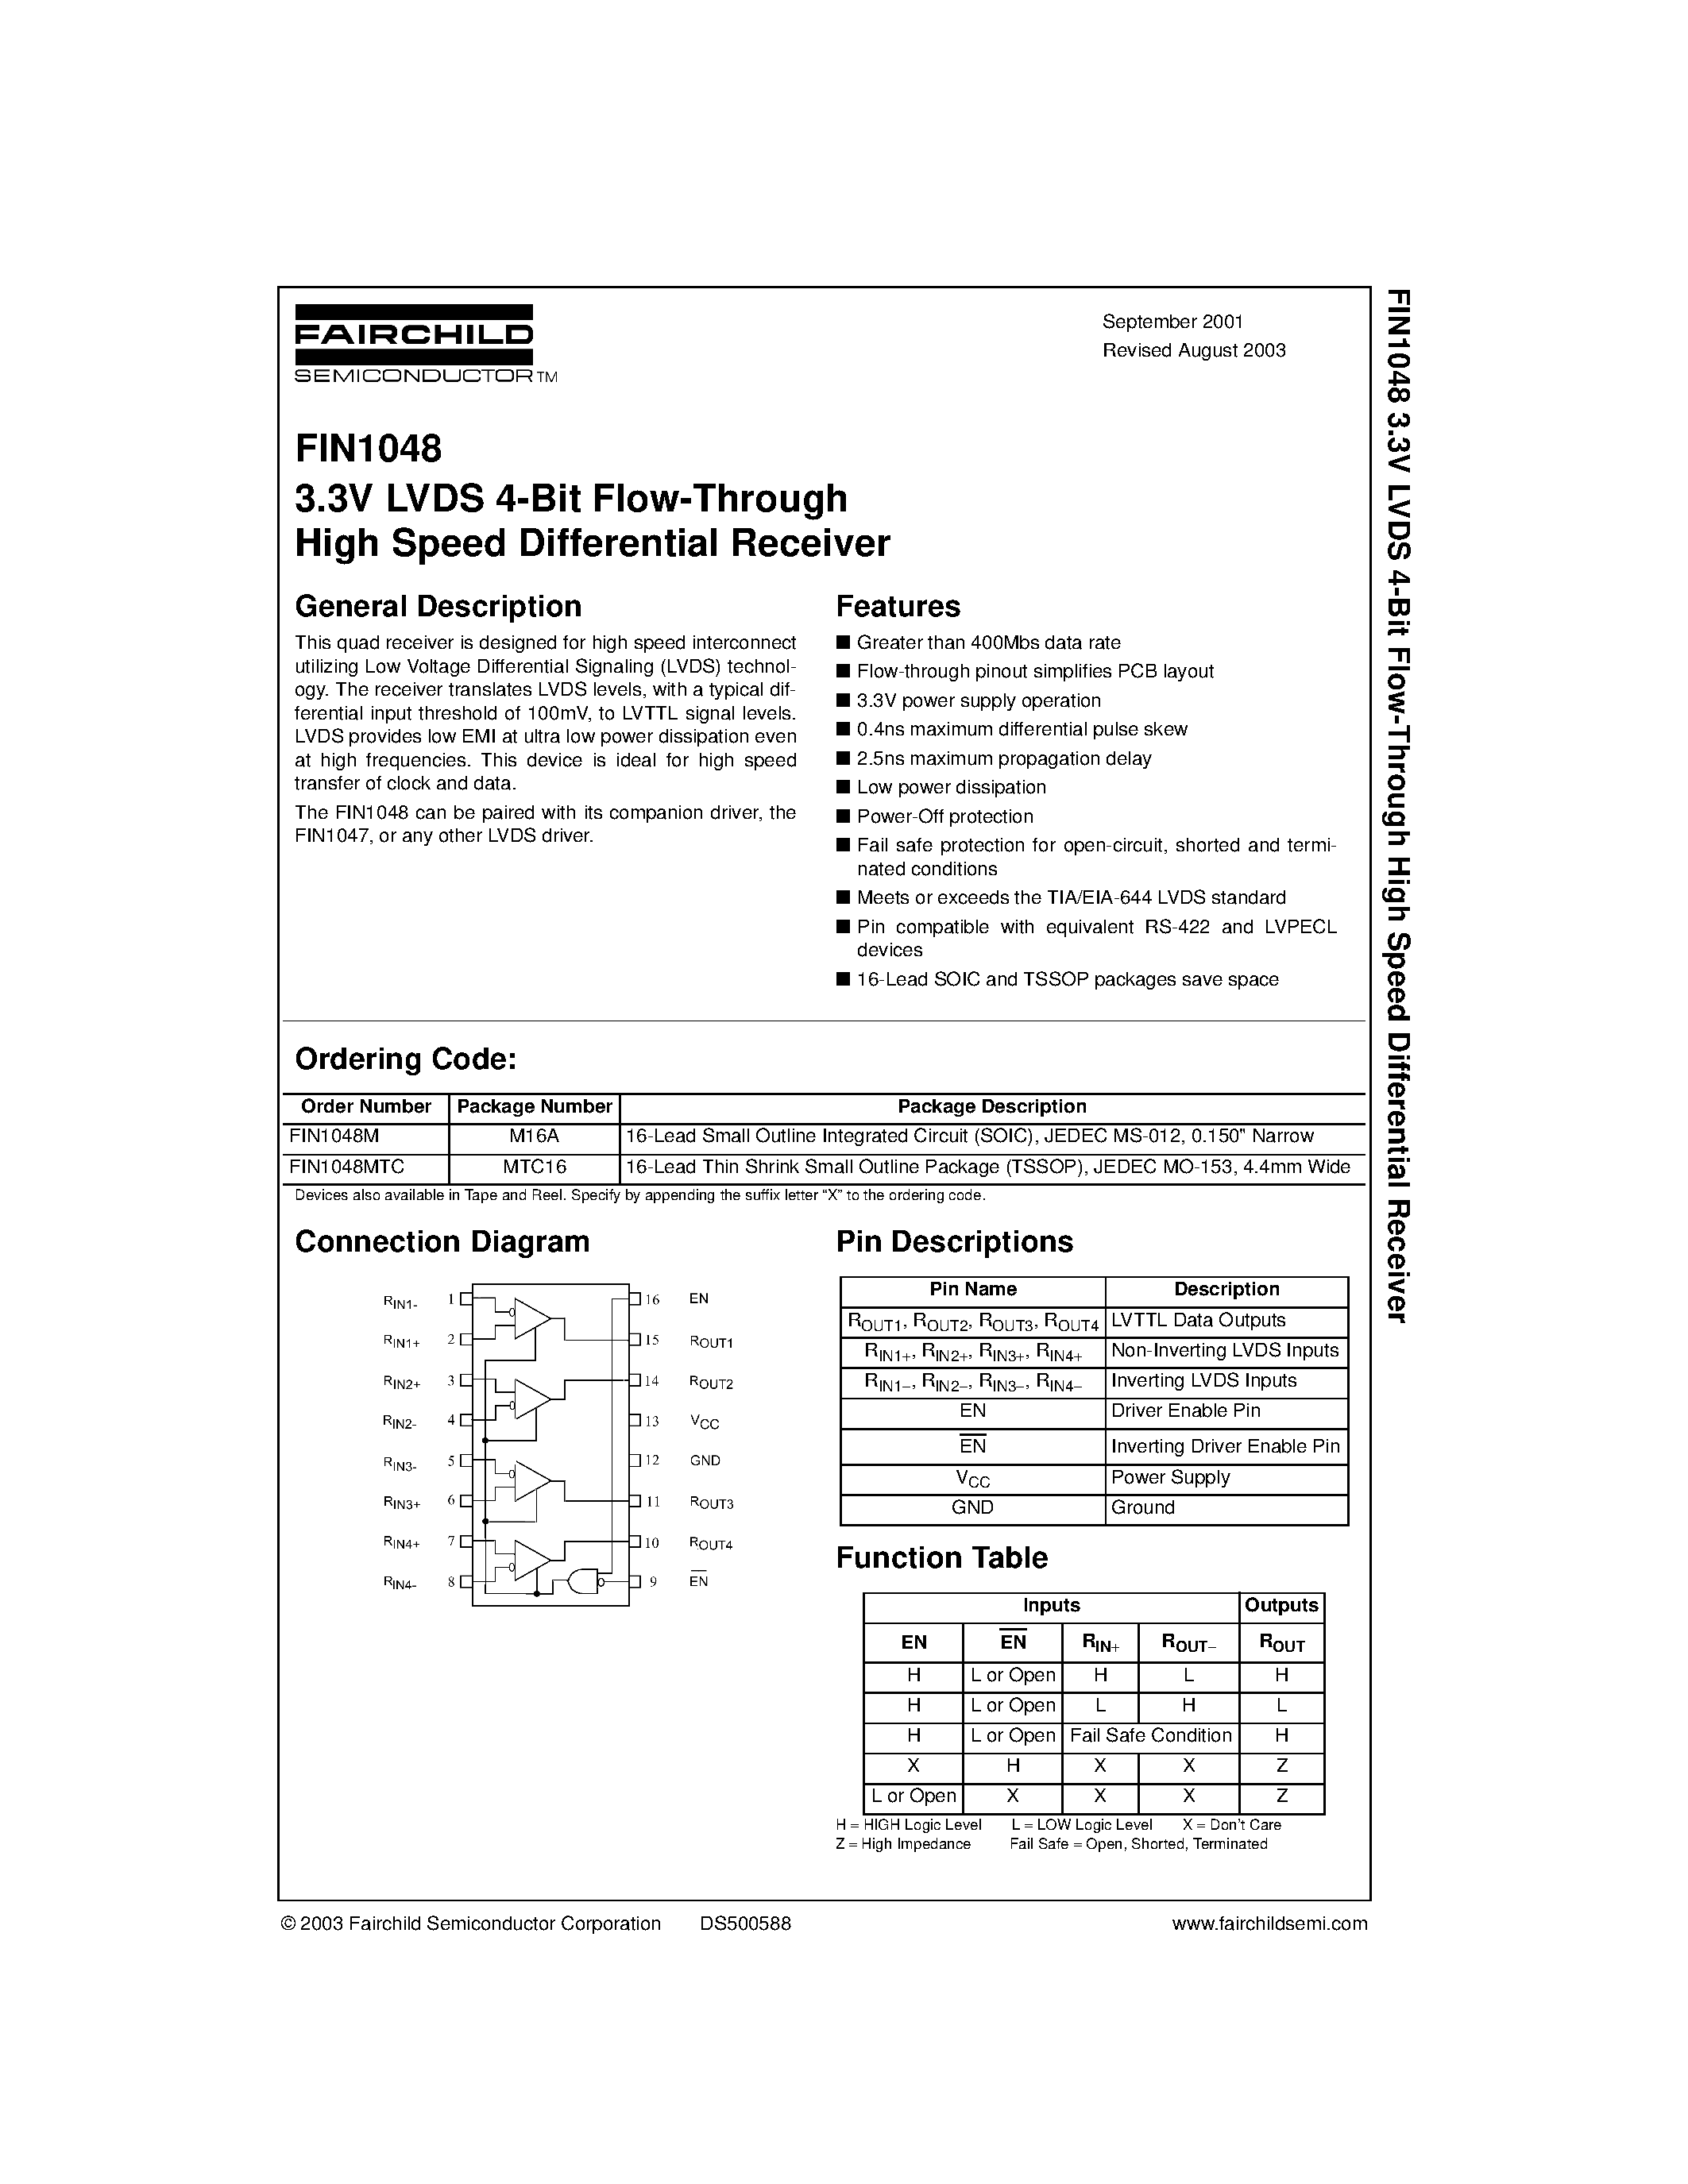 Datasheet FIN1048 - 3.3V LVDS 4-Bit Flow-Through High Speed Differential Receiver page 1